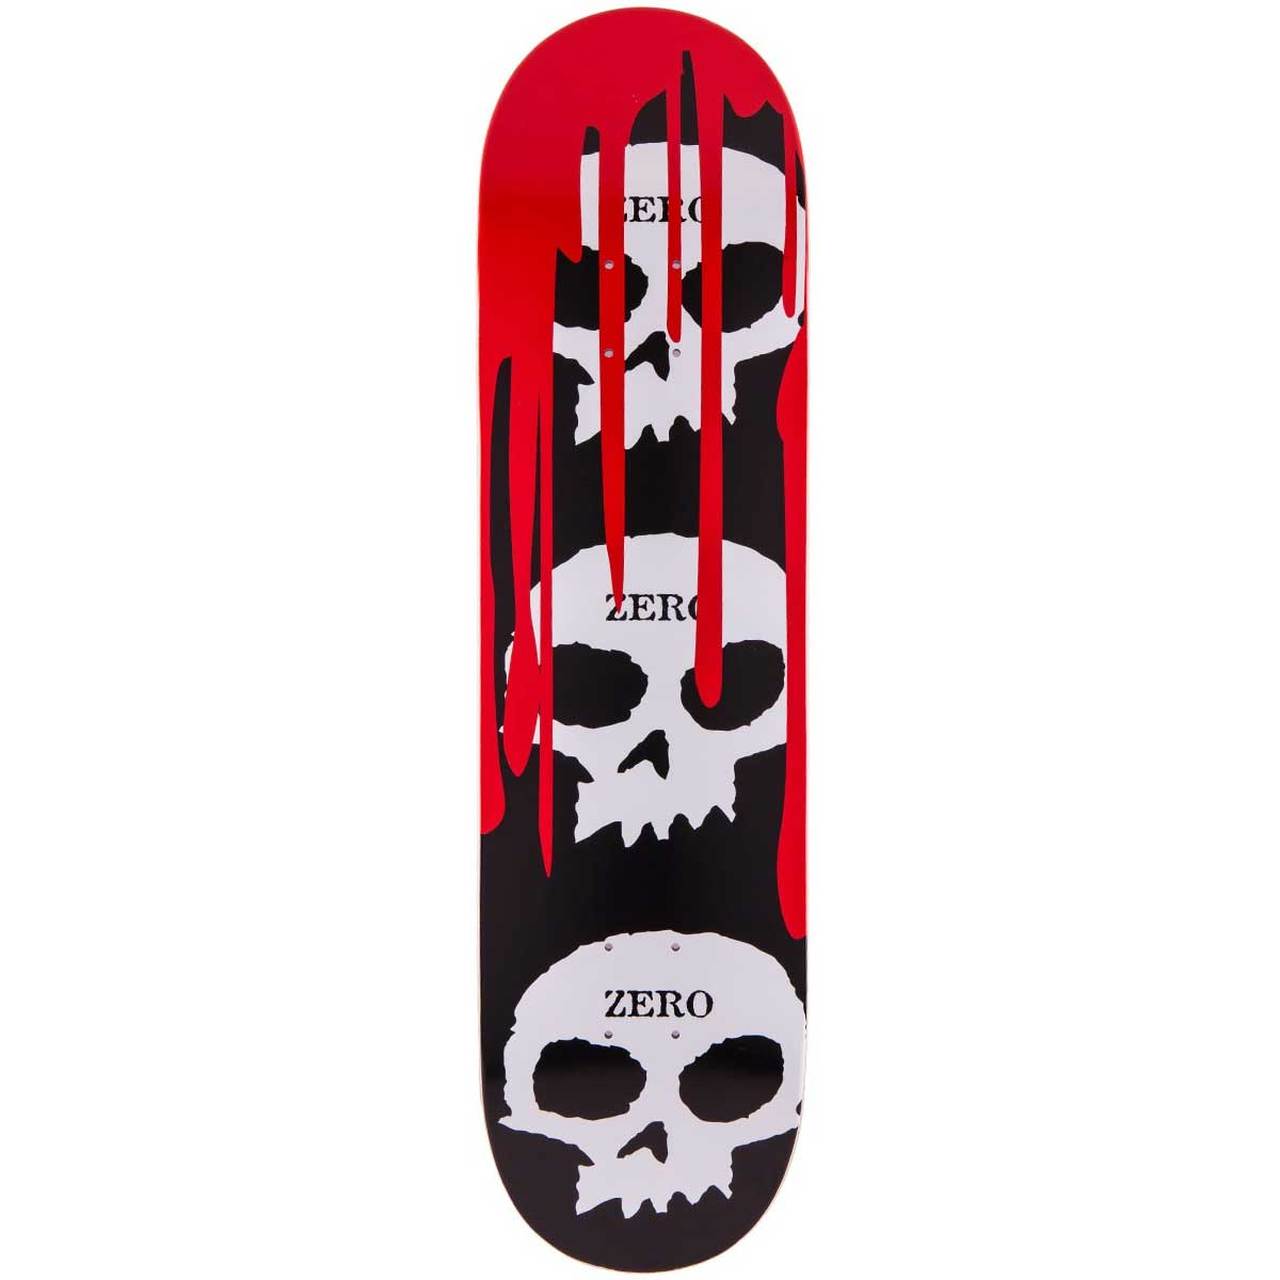 ZERO DECK - 3 SKULL BLOOD (8.5") - The Drive Skateshop